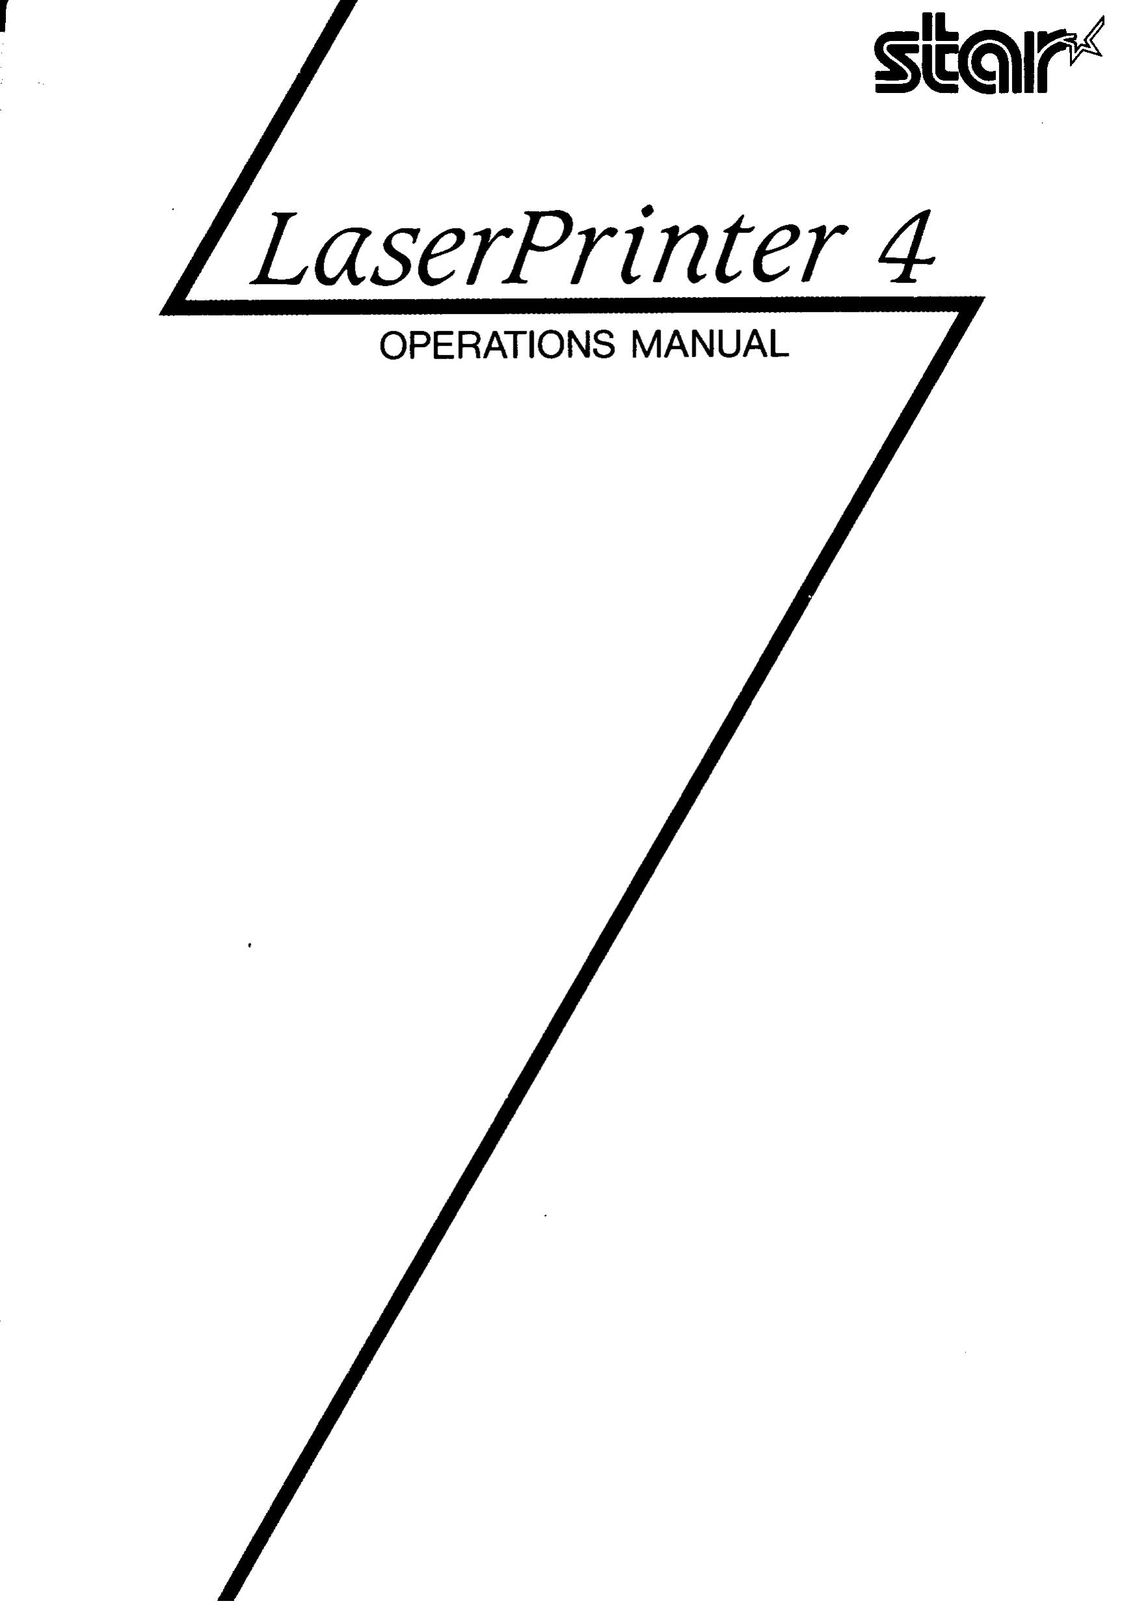 Star Micronics LaserPrinter4 Printer User Manual